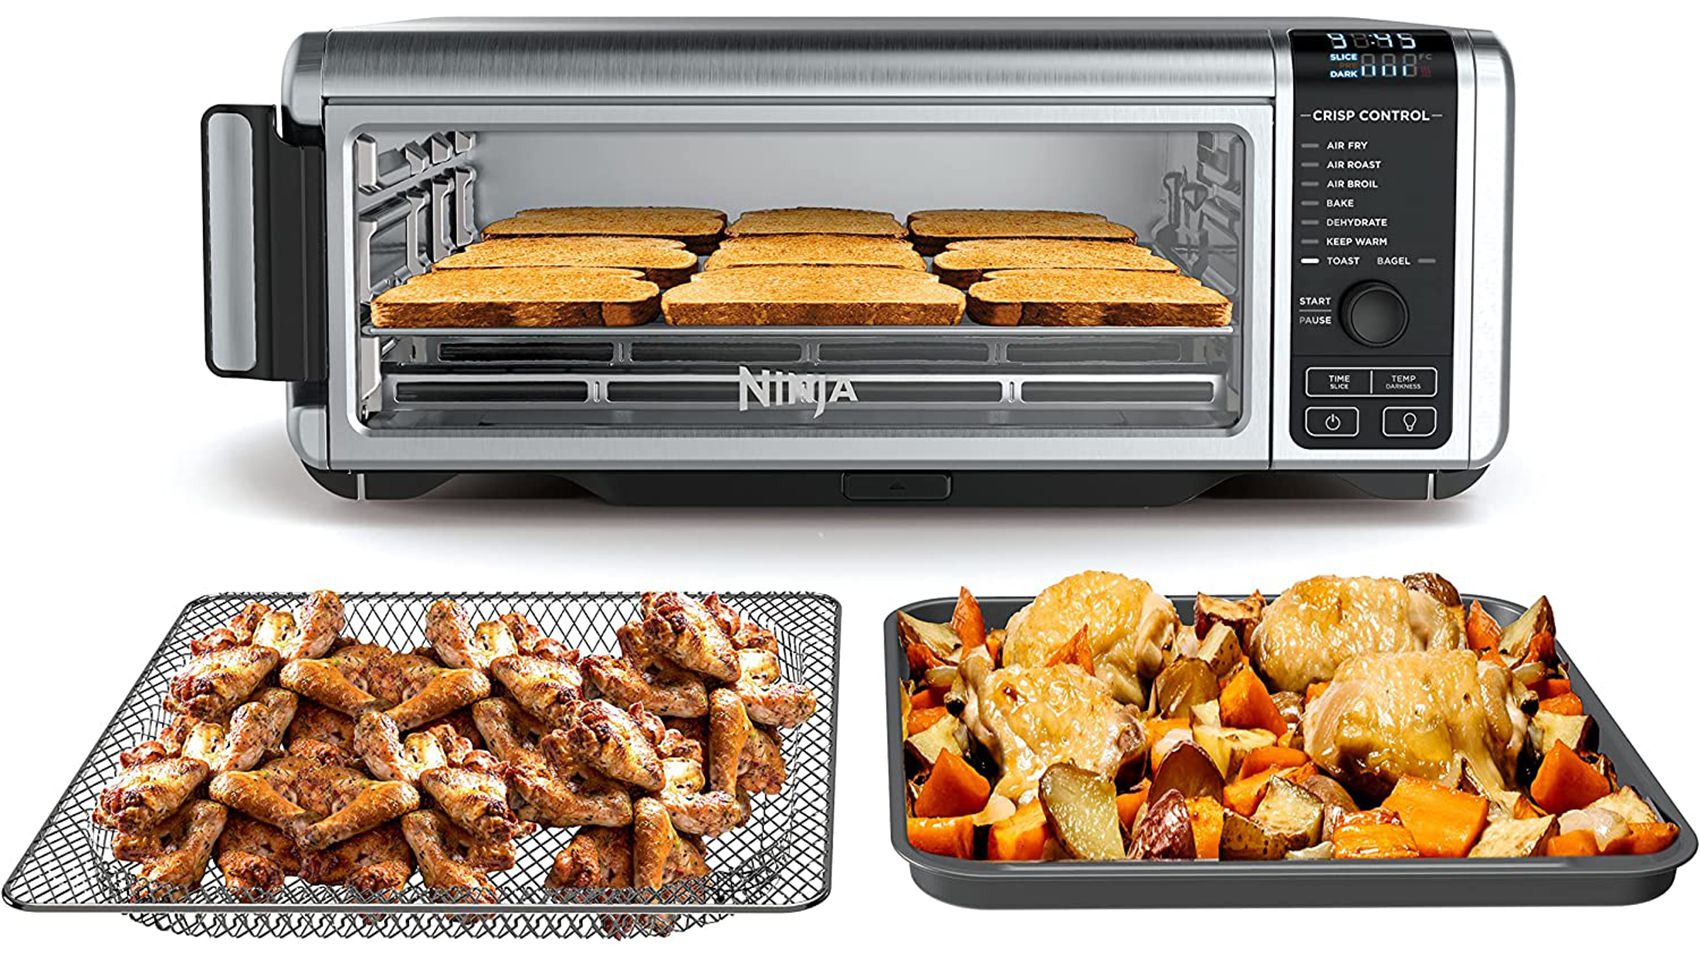 Air Fryer 5.5 Quart Capacity, Cooks, Crisps, Roasts, Broils, Bakes